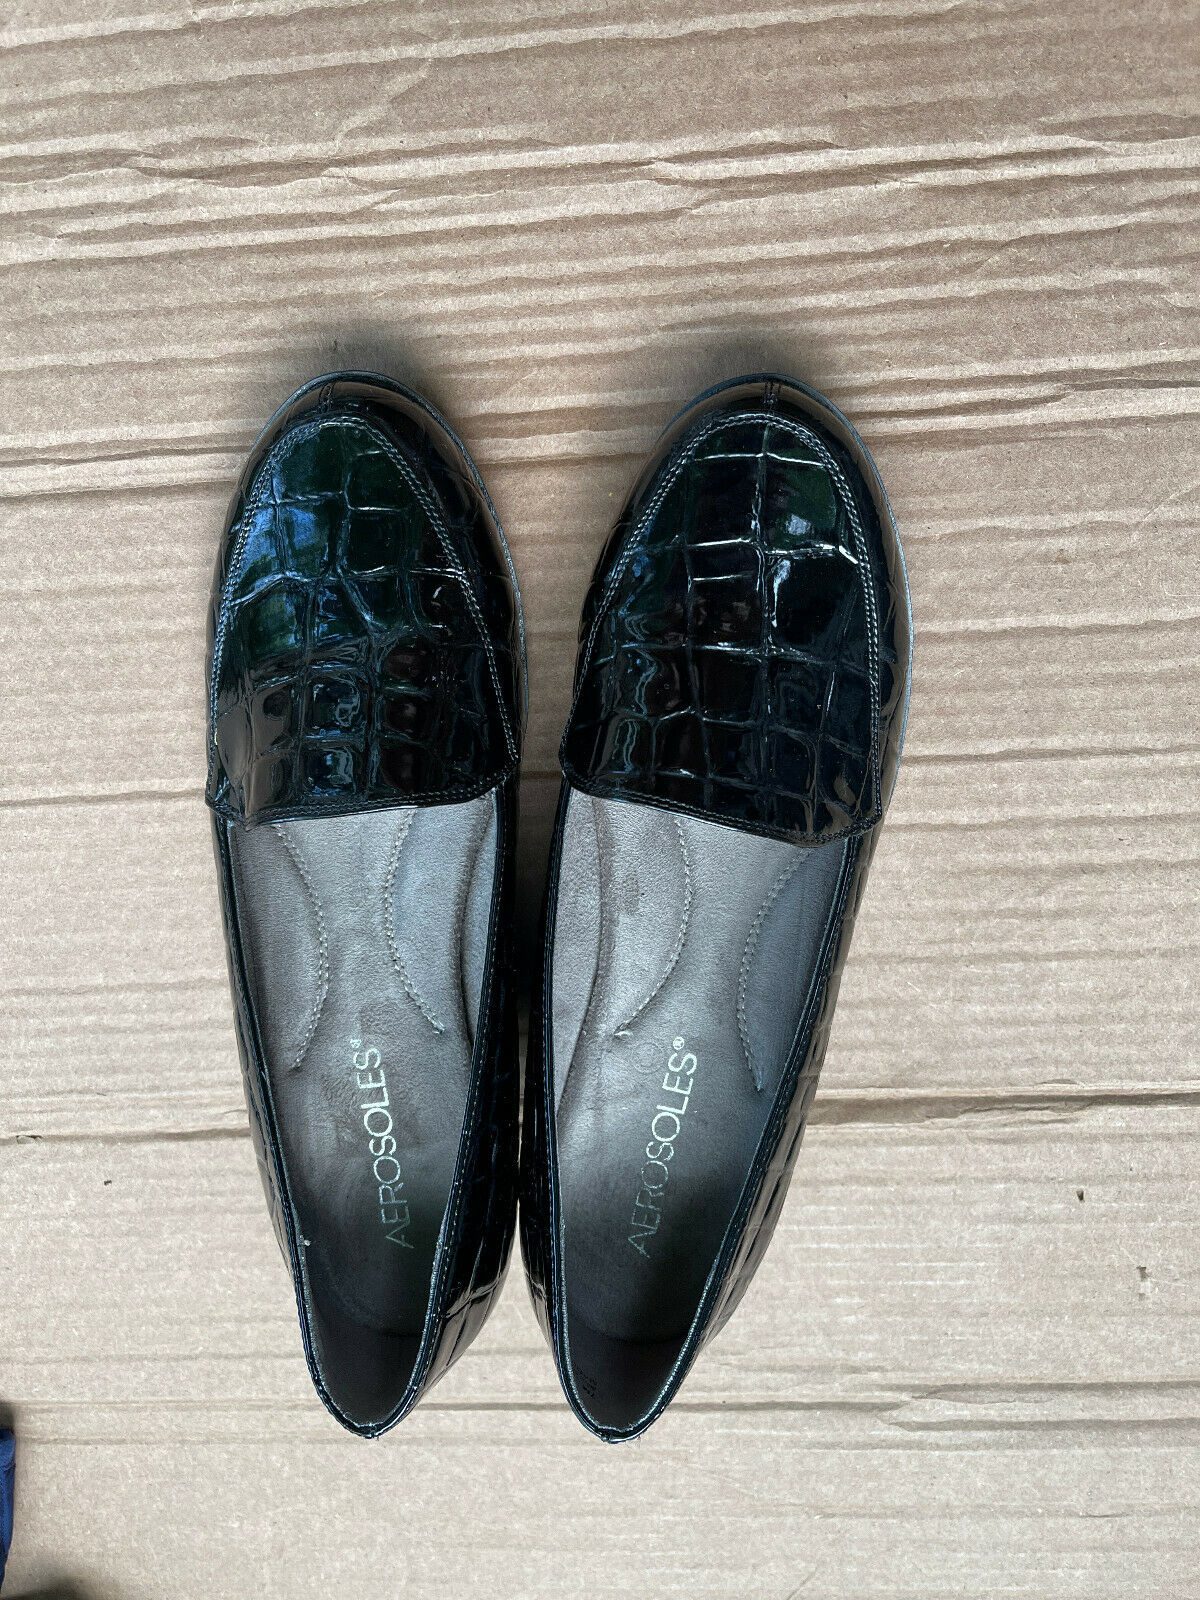 AEROSOLES Women's TRUE MATCH Black Cocro Skin Slip On Wedge Loafers Shoes Sz 7M